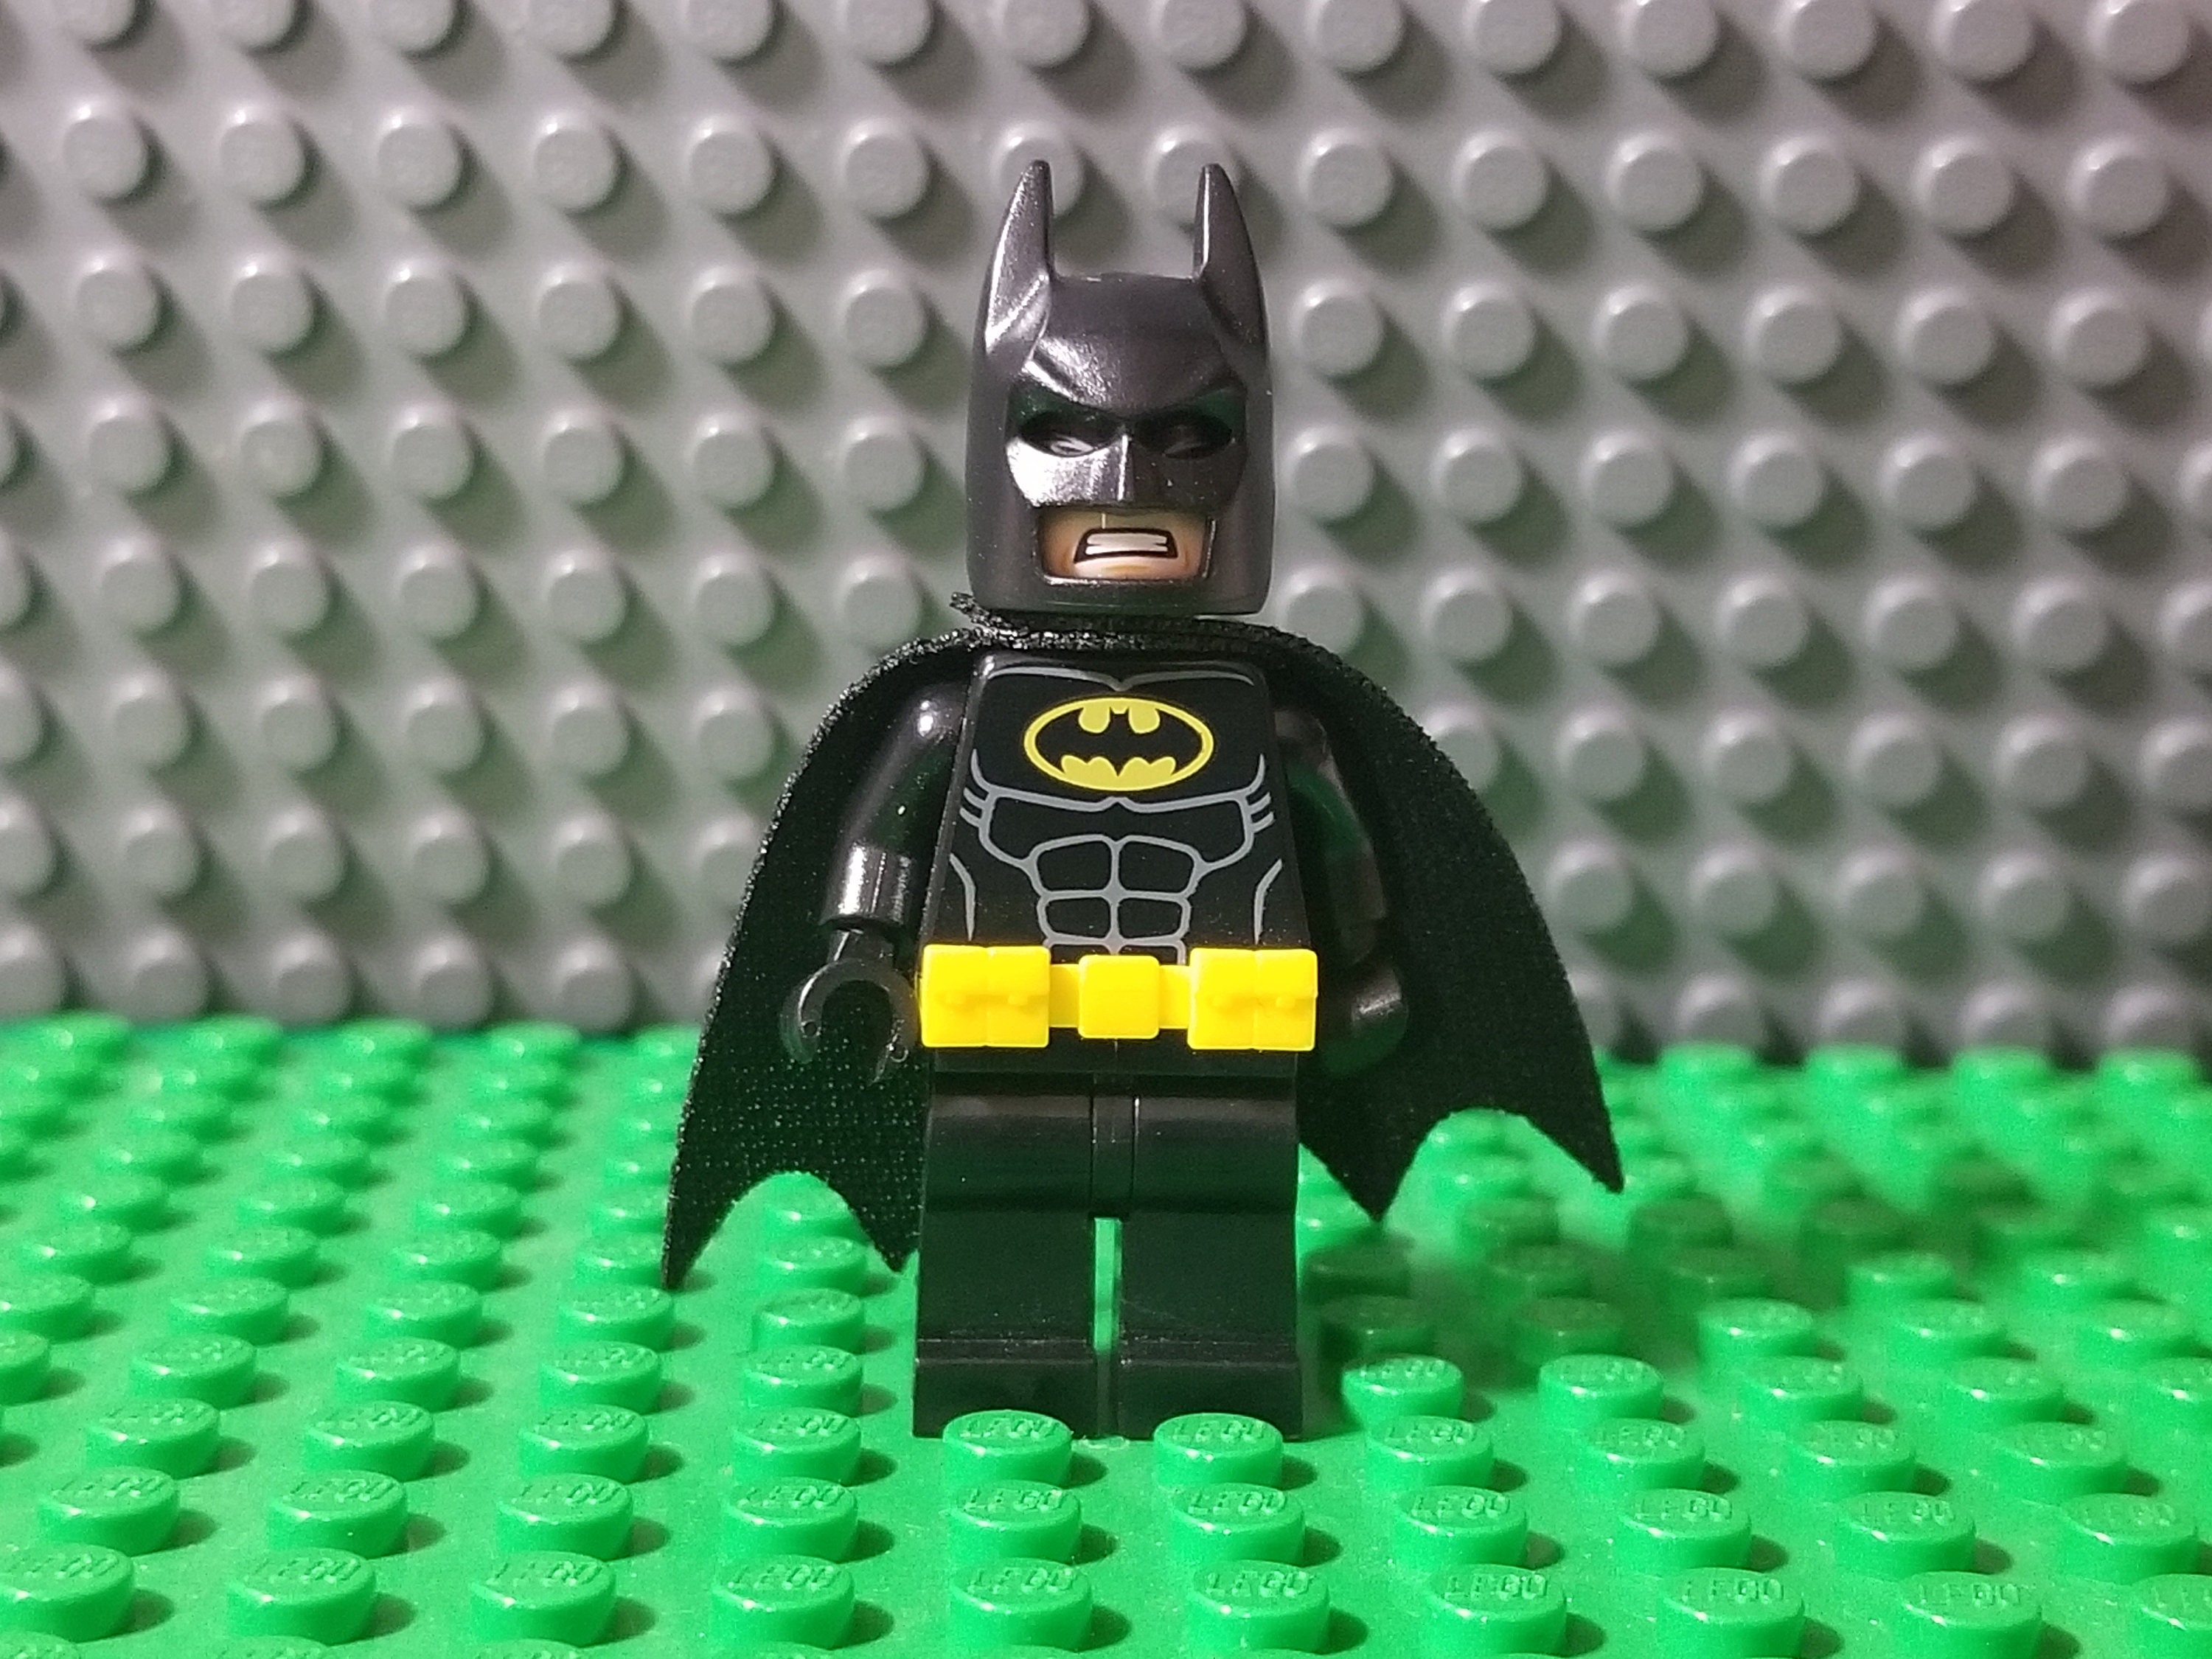 JOKER FROM BATMAN FIGURE MINI Building Blocks PLAY WITH LEGOS USA SELLER NIP